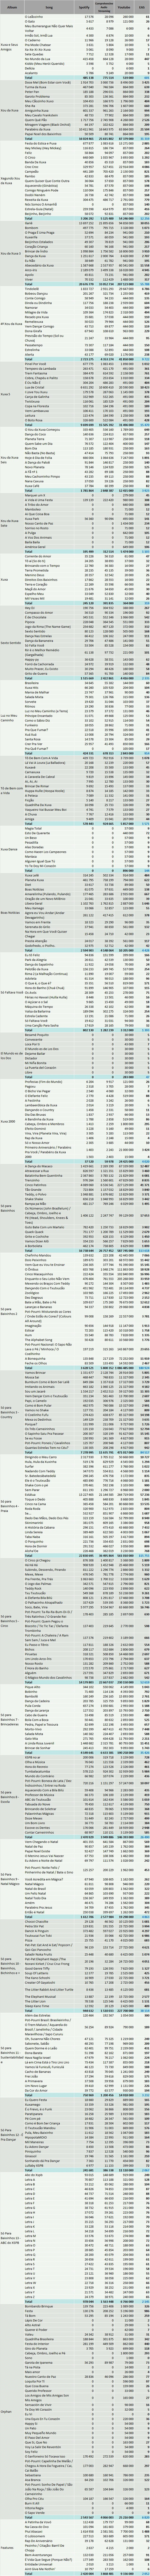 CSPC Xuxa detailed streaming Spotify YouTube statistics